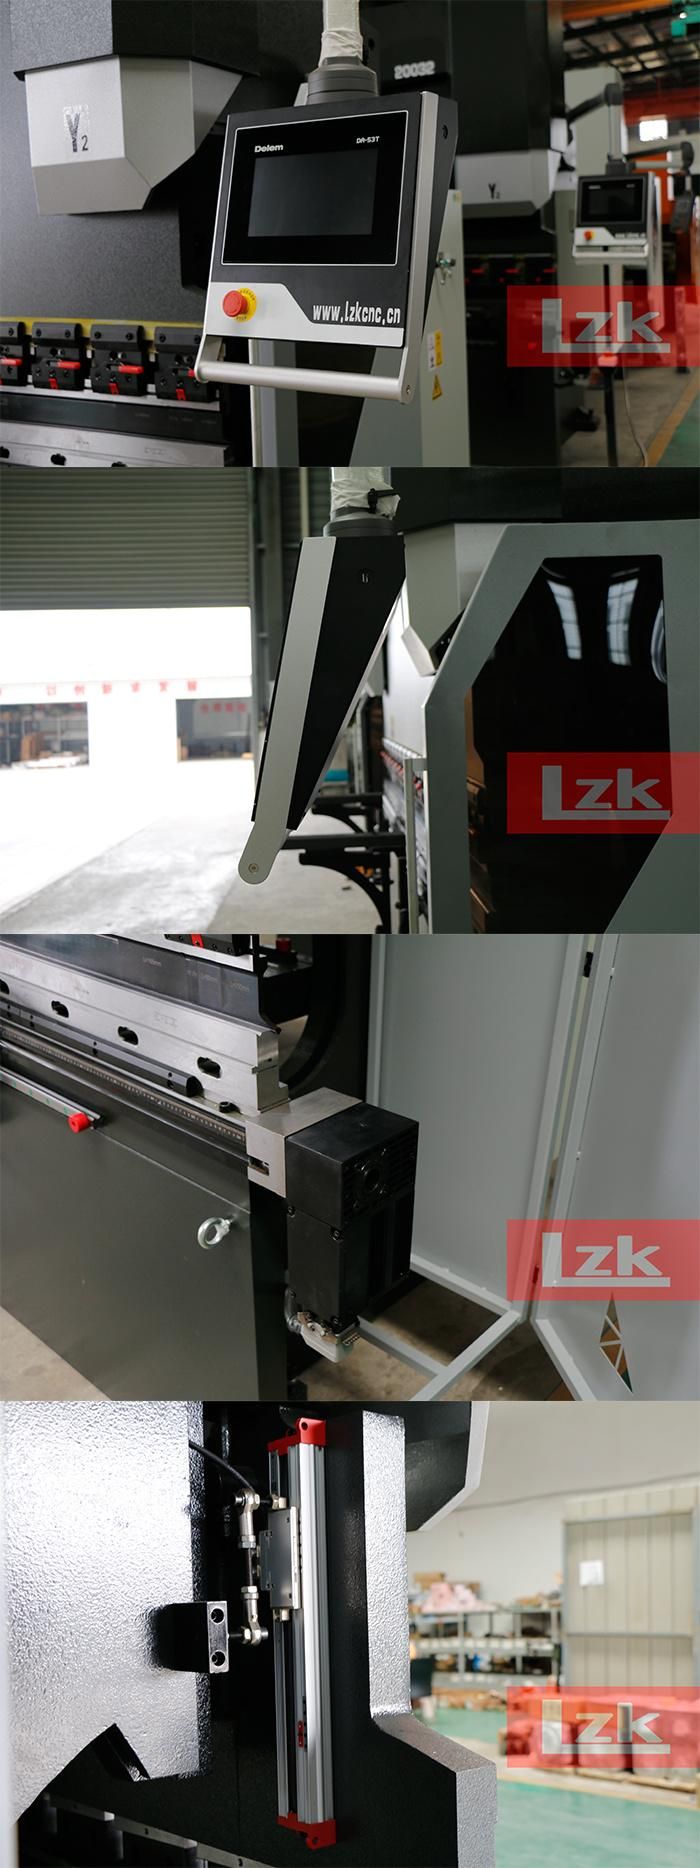 Hydraulic CNC Press Brake Machine 4000 with Compensation